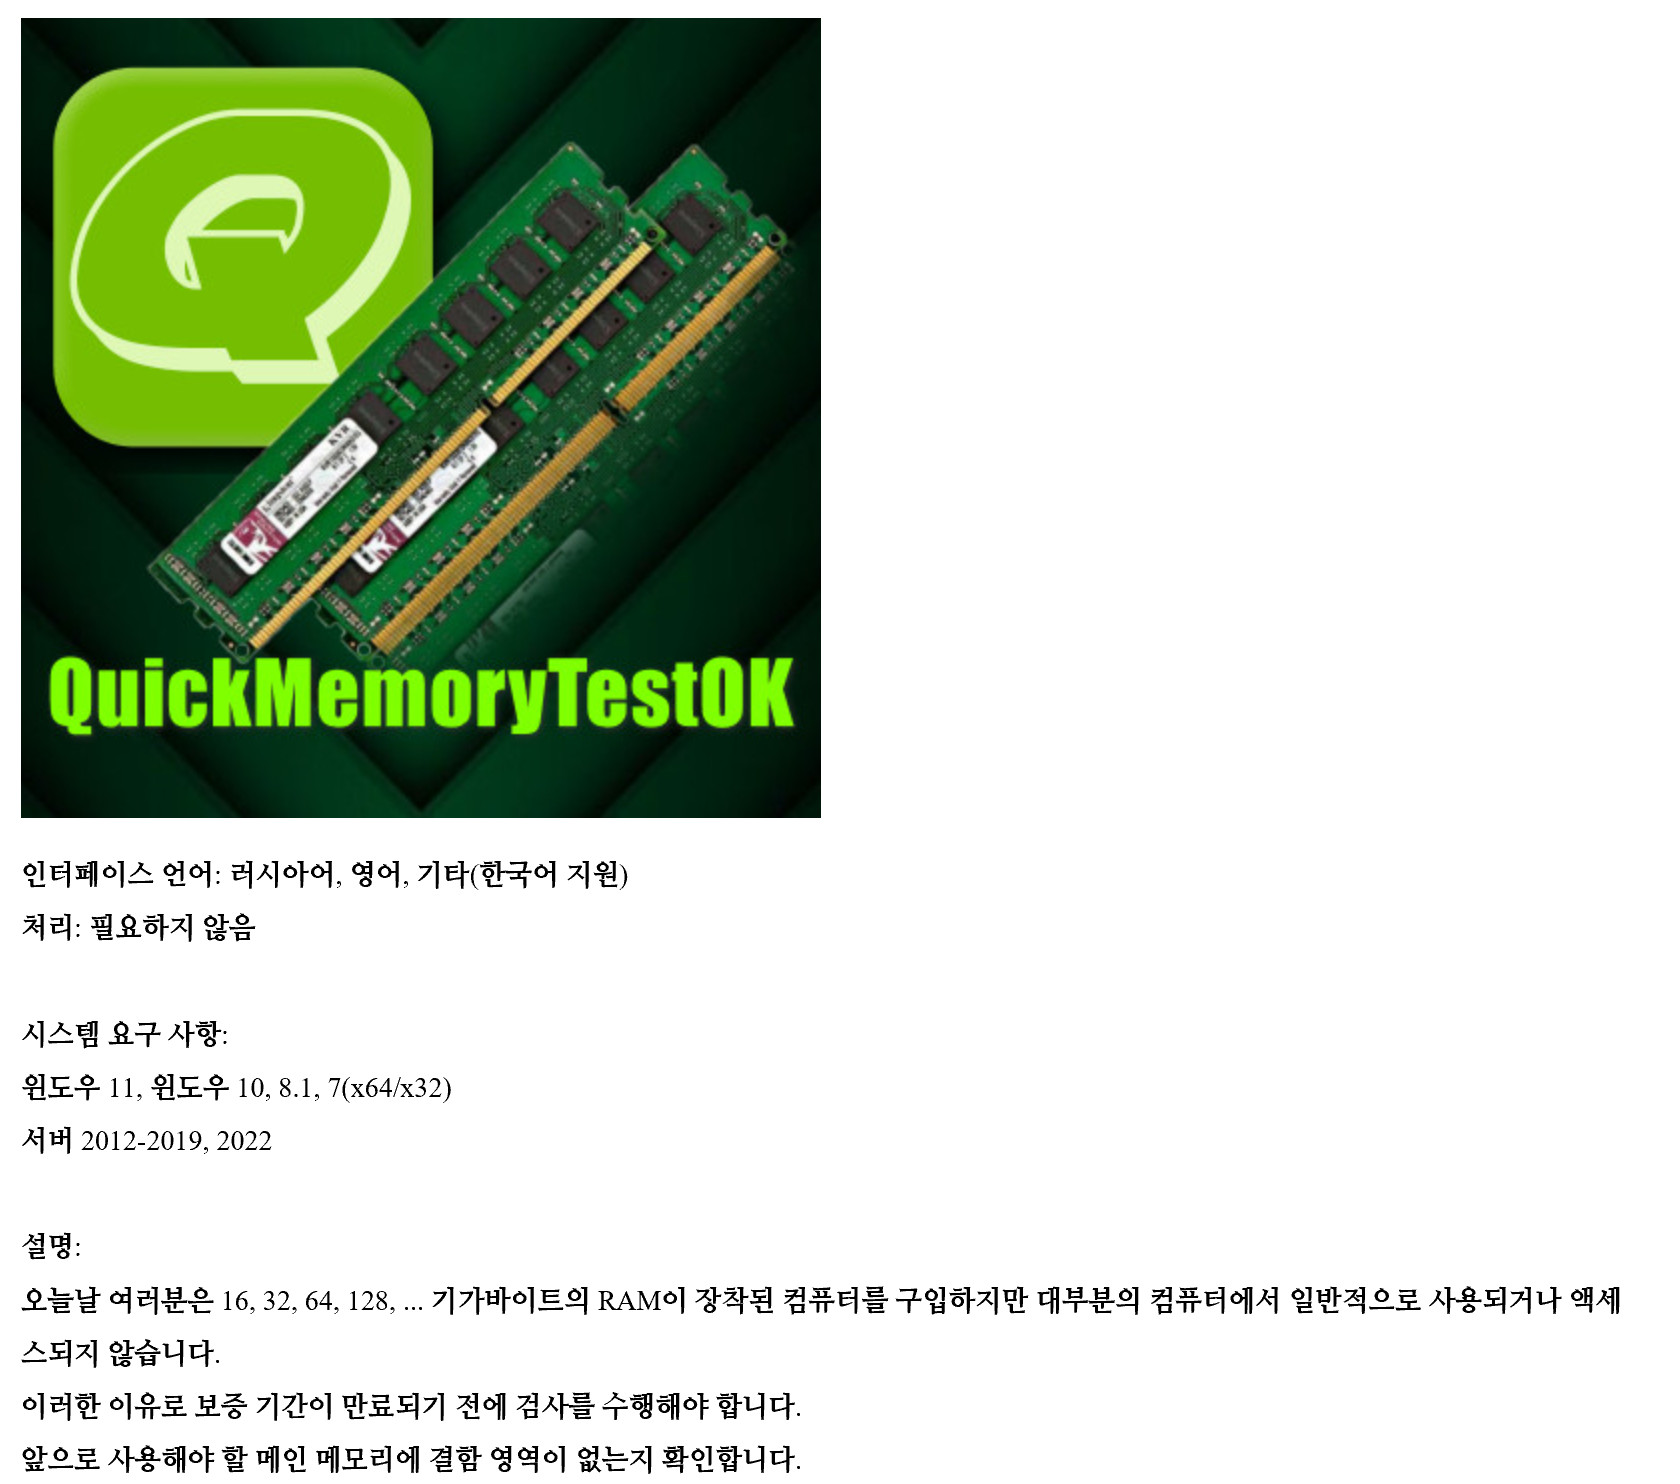 for windows instal QuickMemoryTestOK 4.61